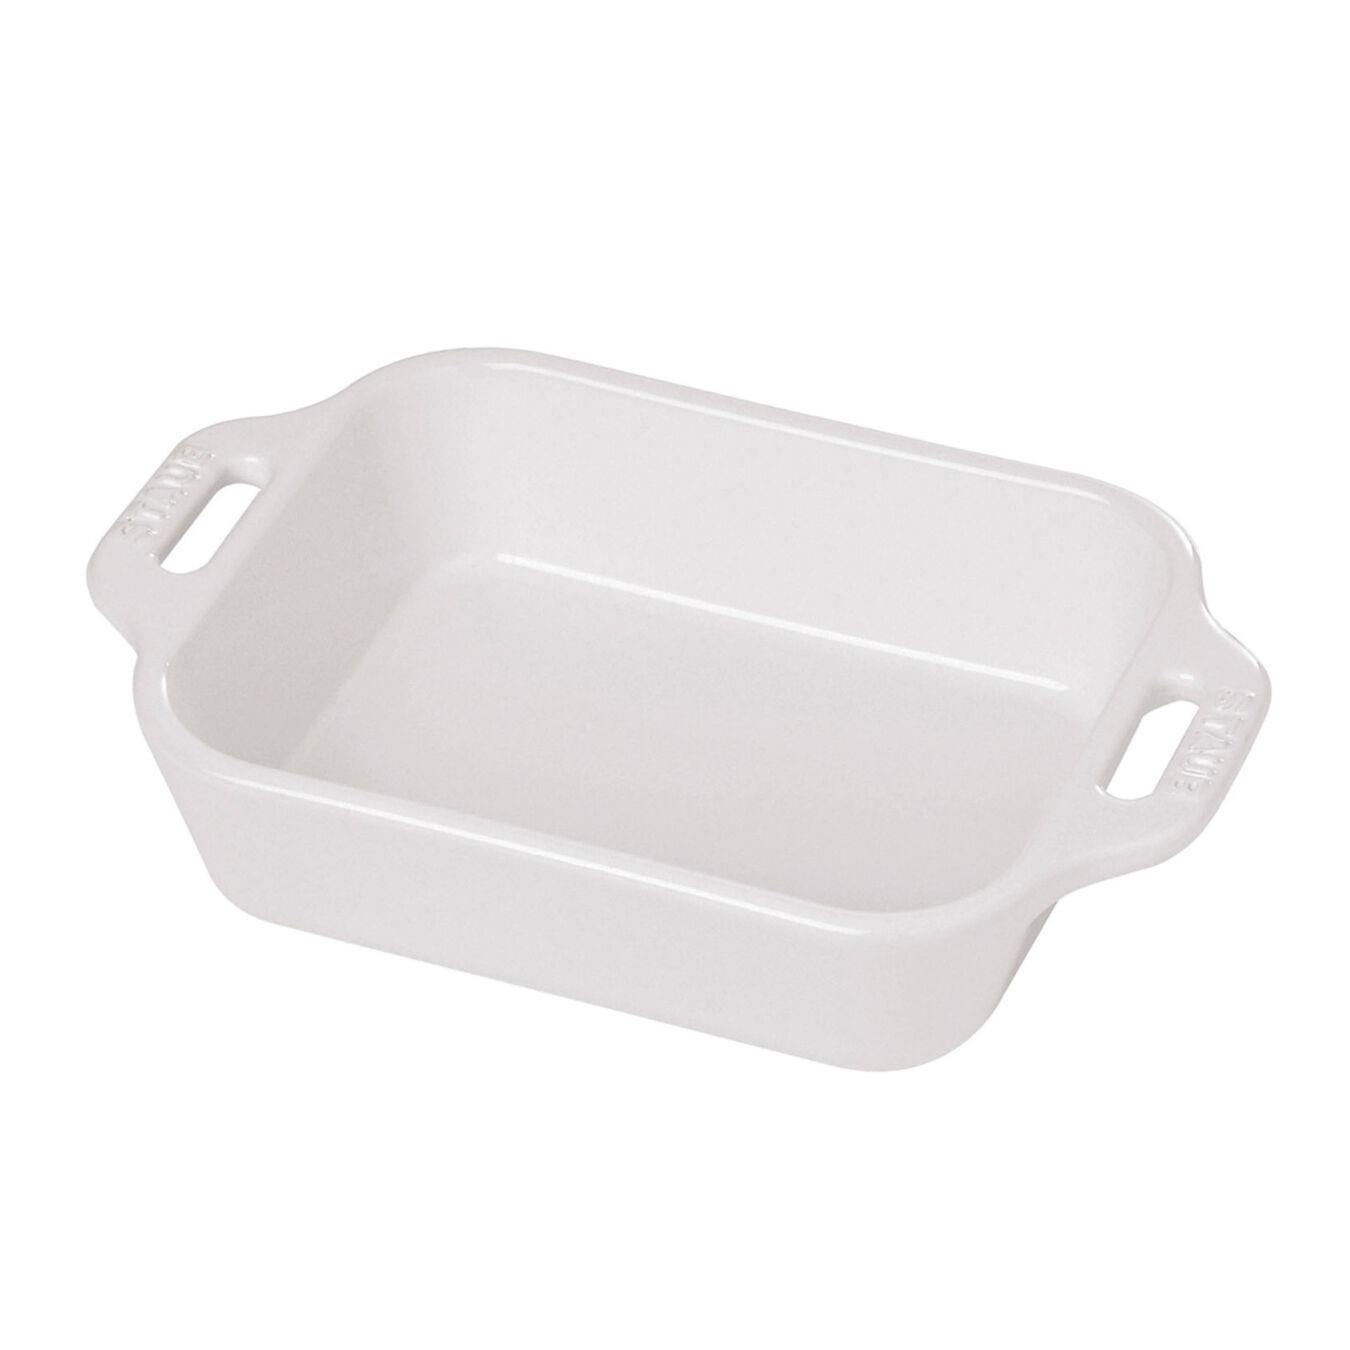  ceramic rectangular Special shape bakeware, white,,large 1